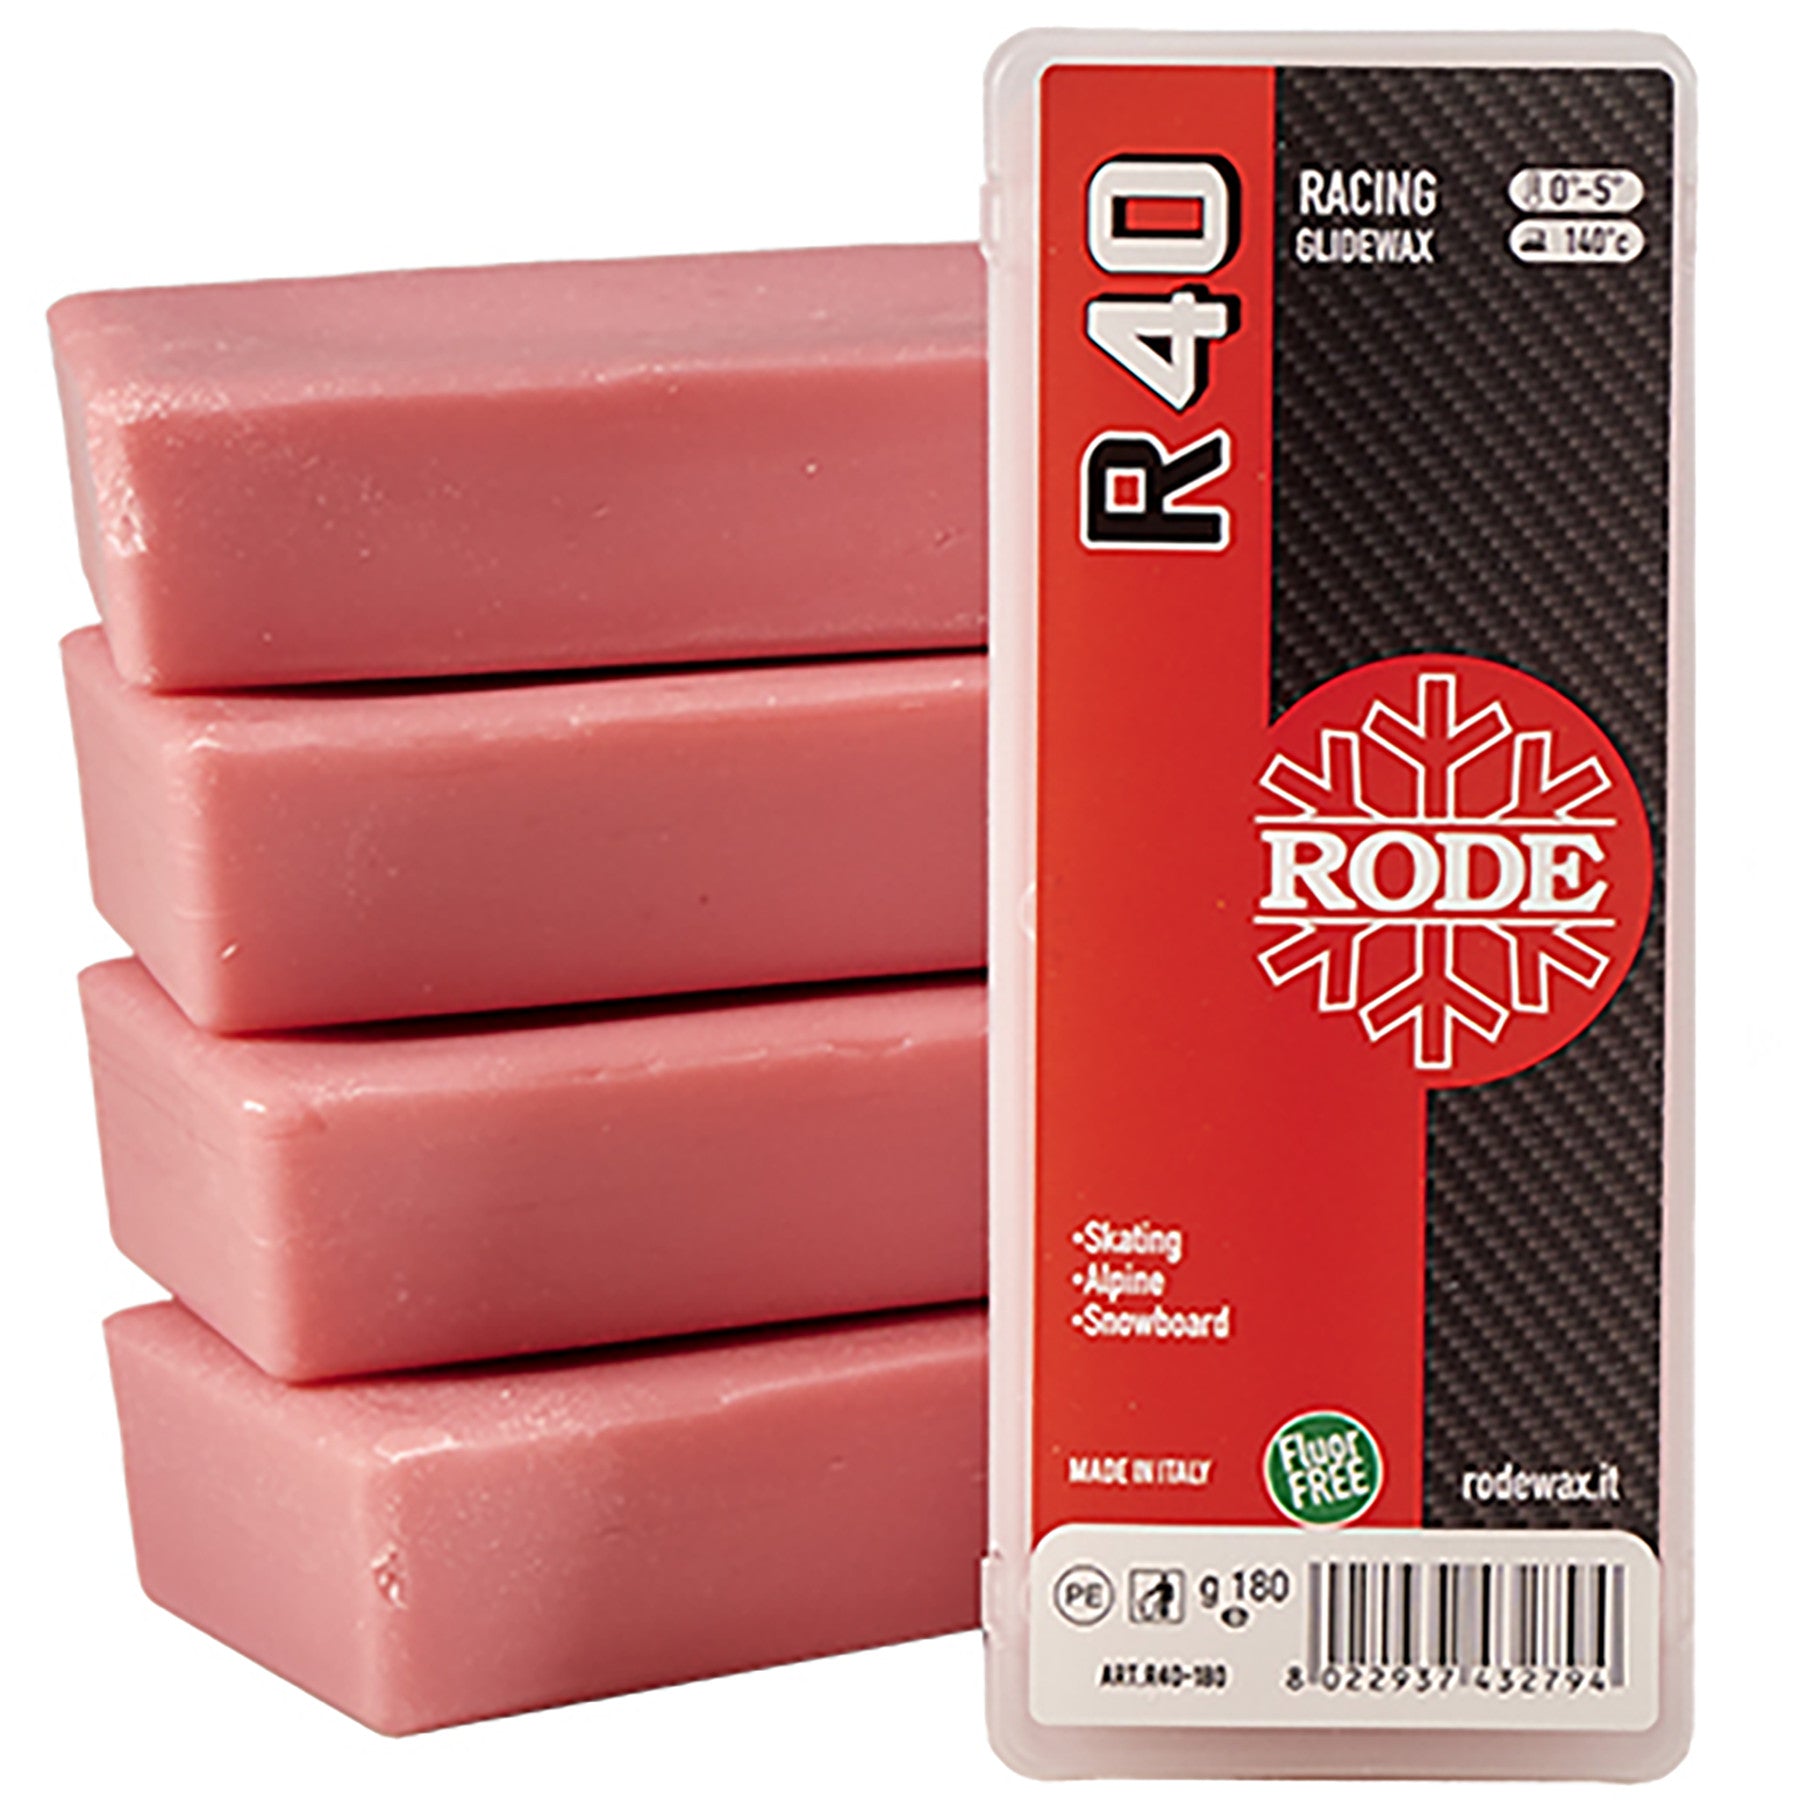 Buy r40-red-0-5-c Rode Racing Glide Wax 900g